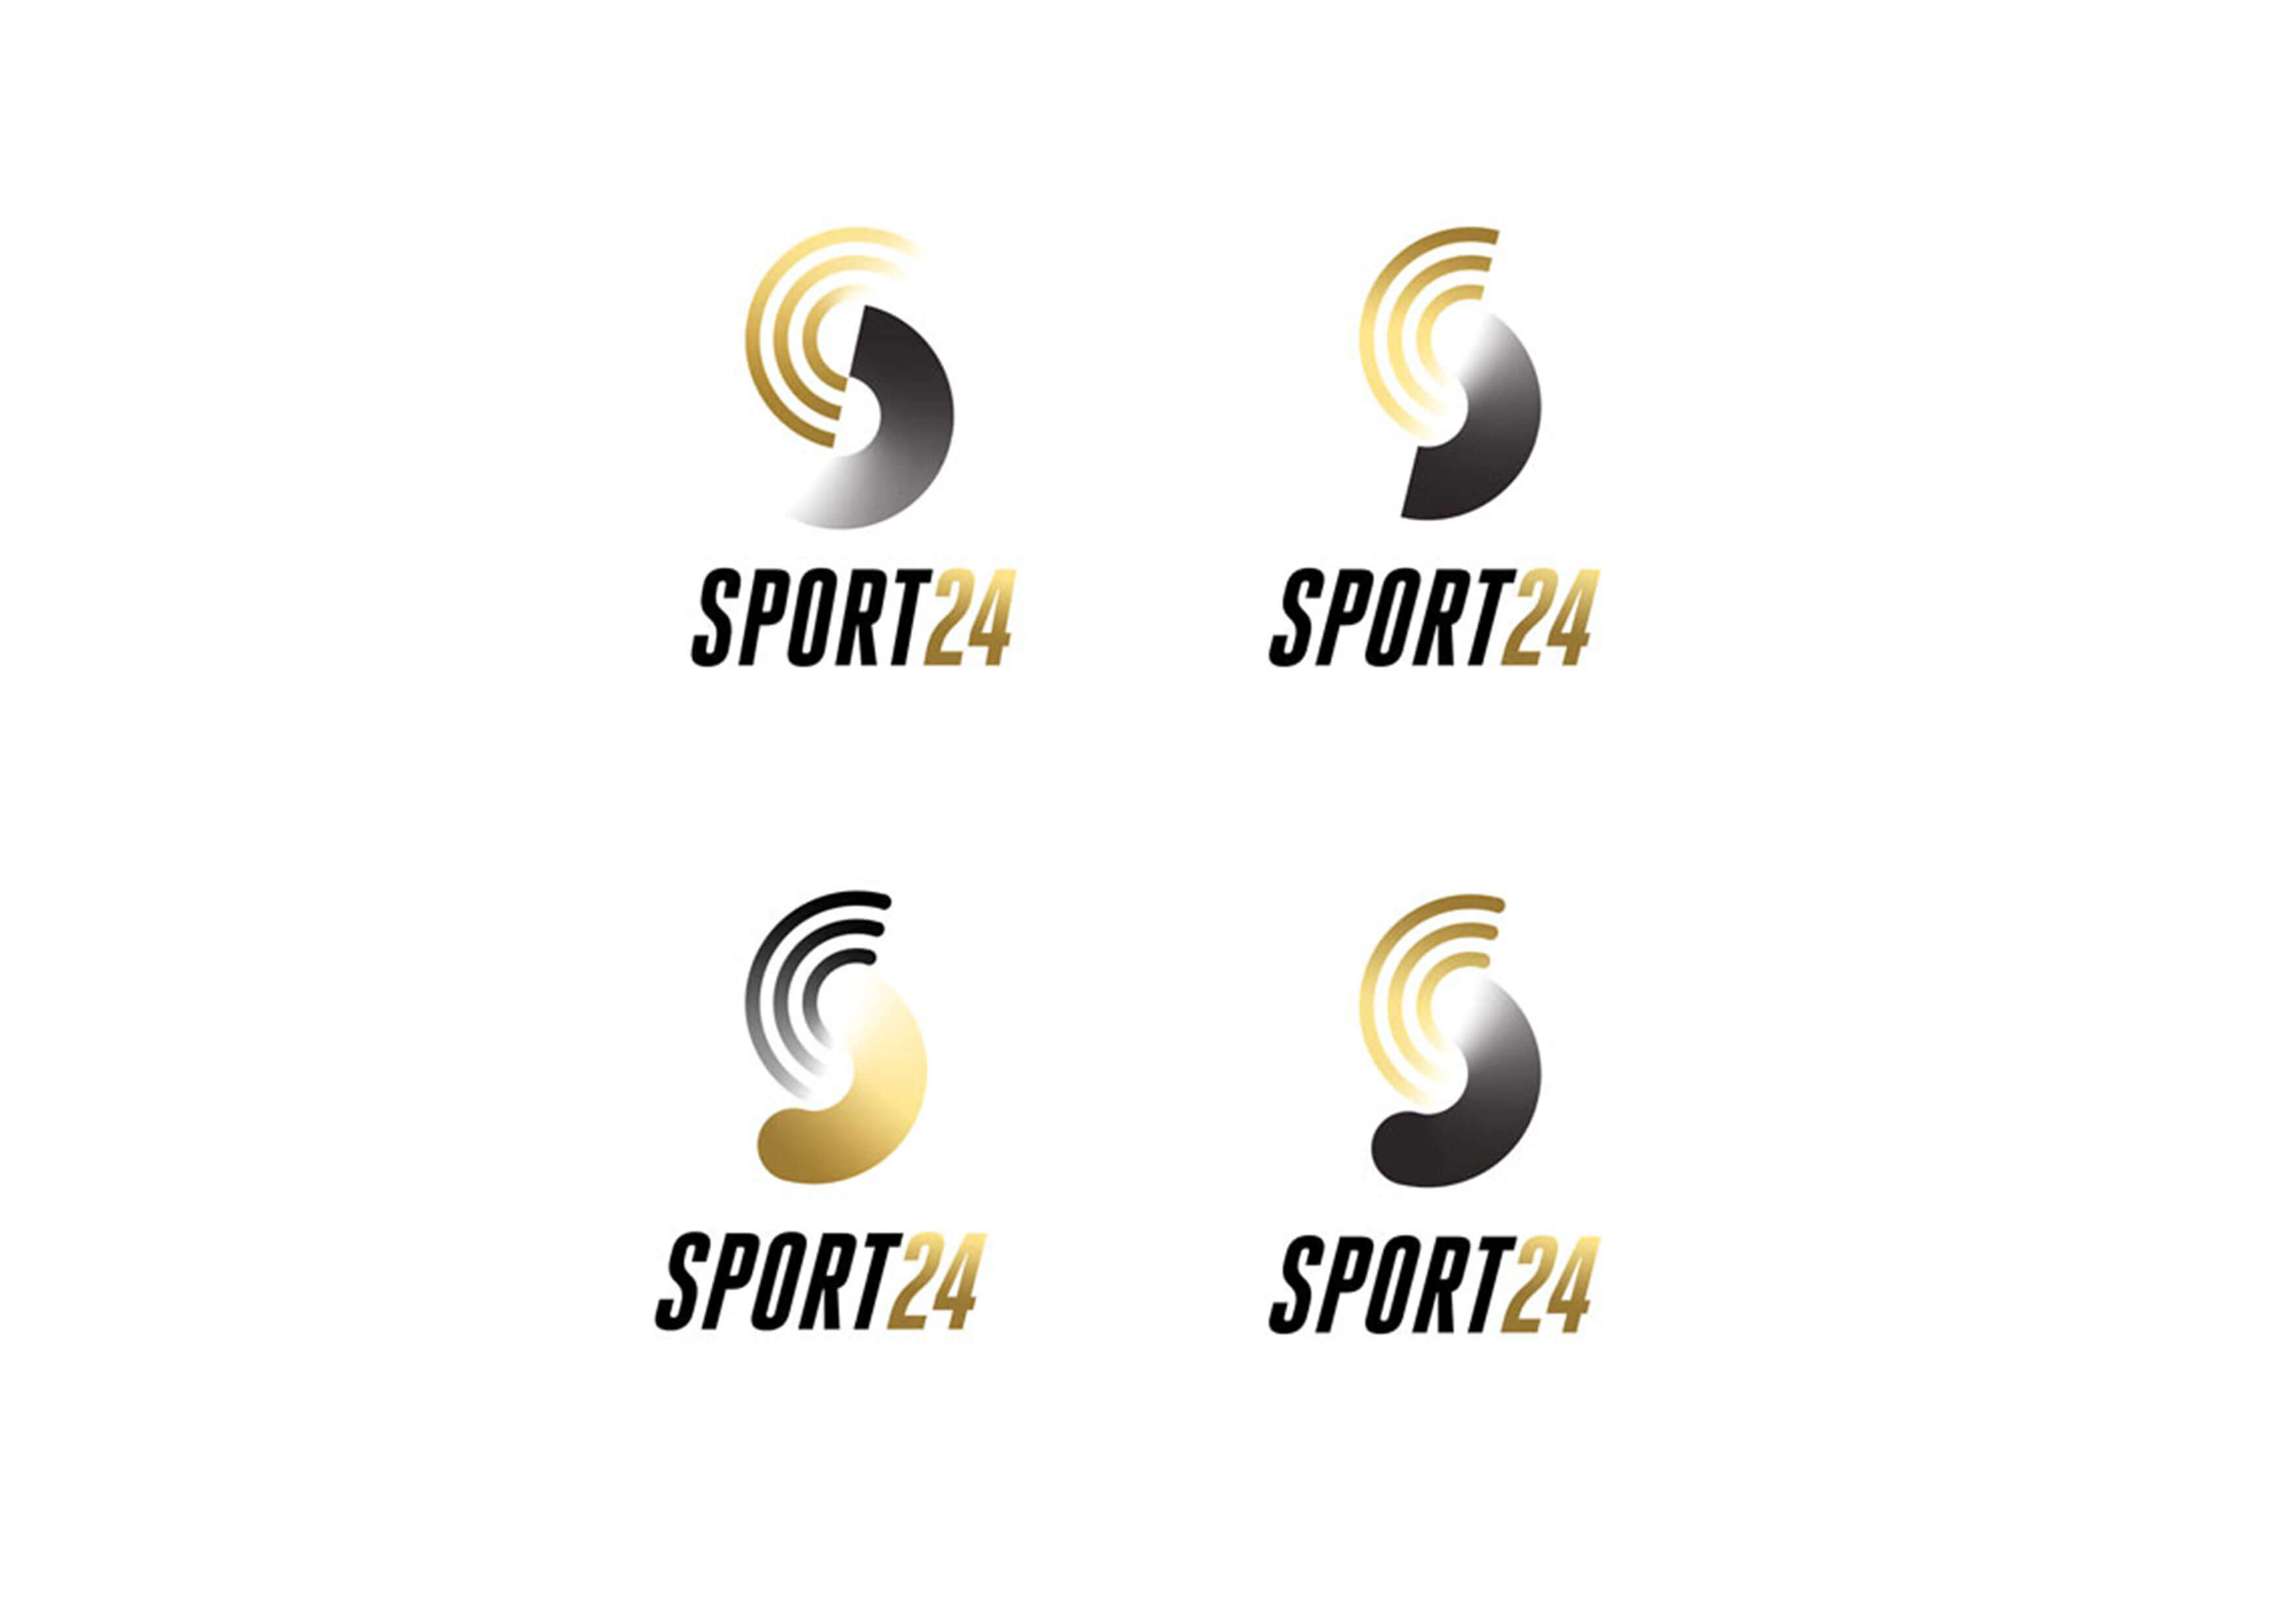 sport24 identity process 19